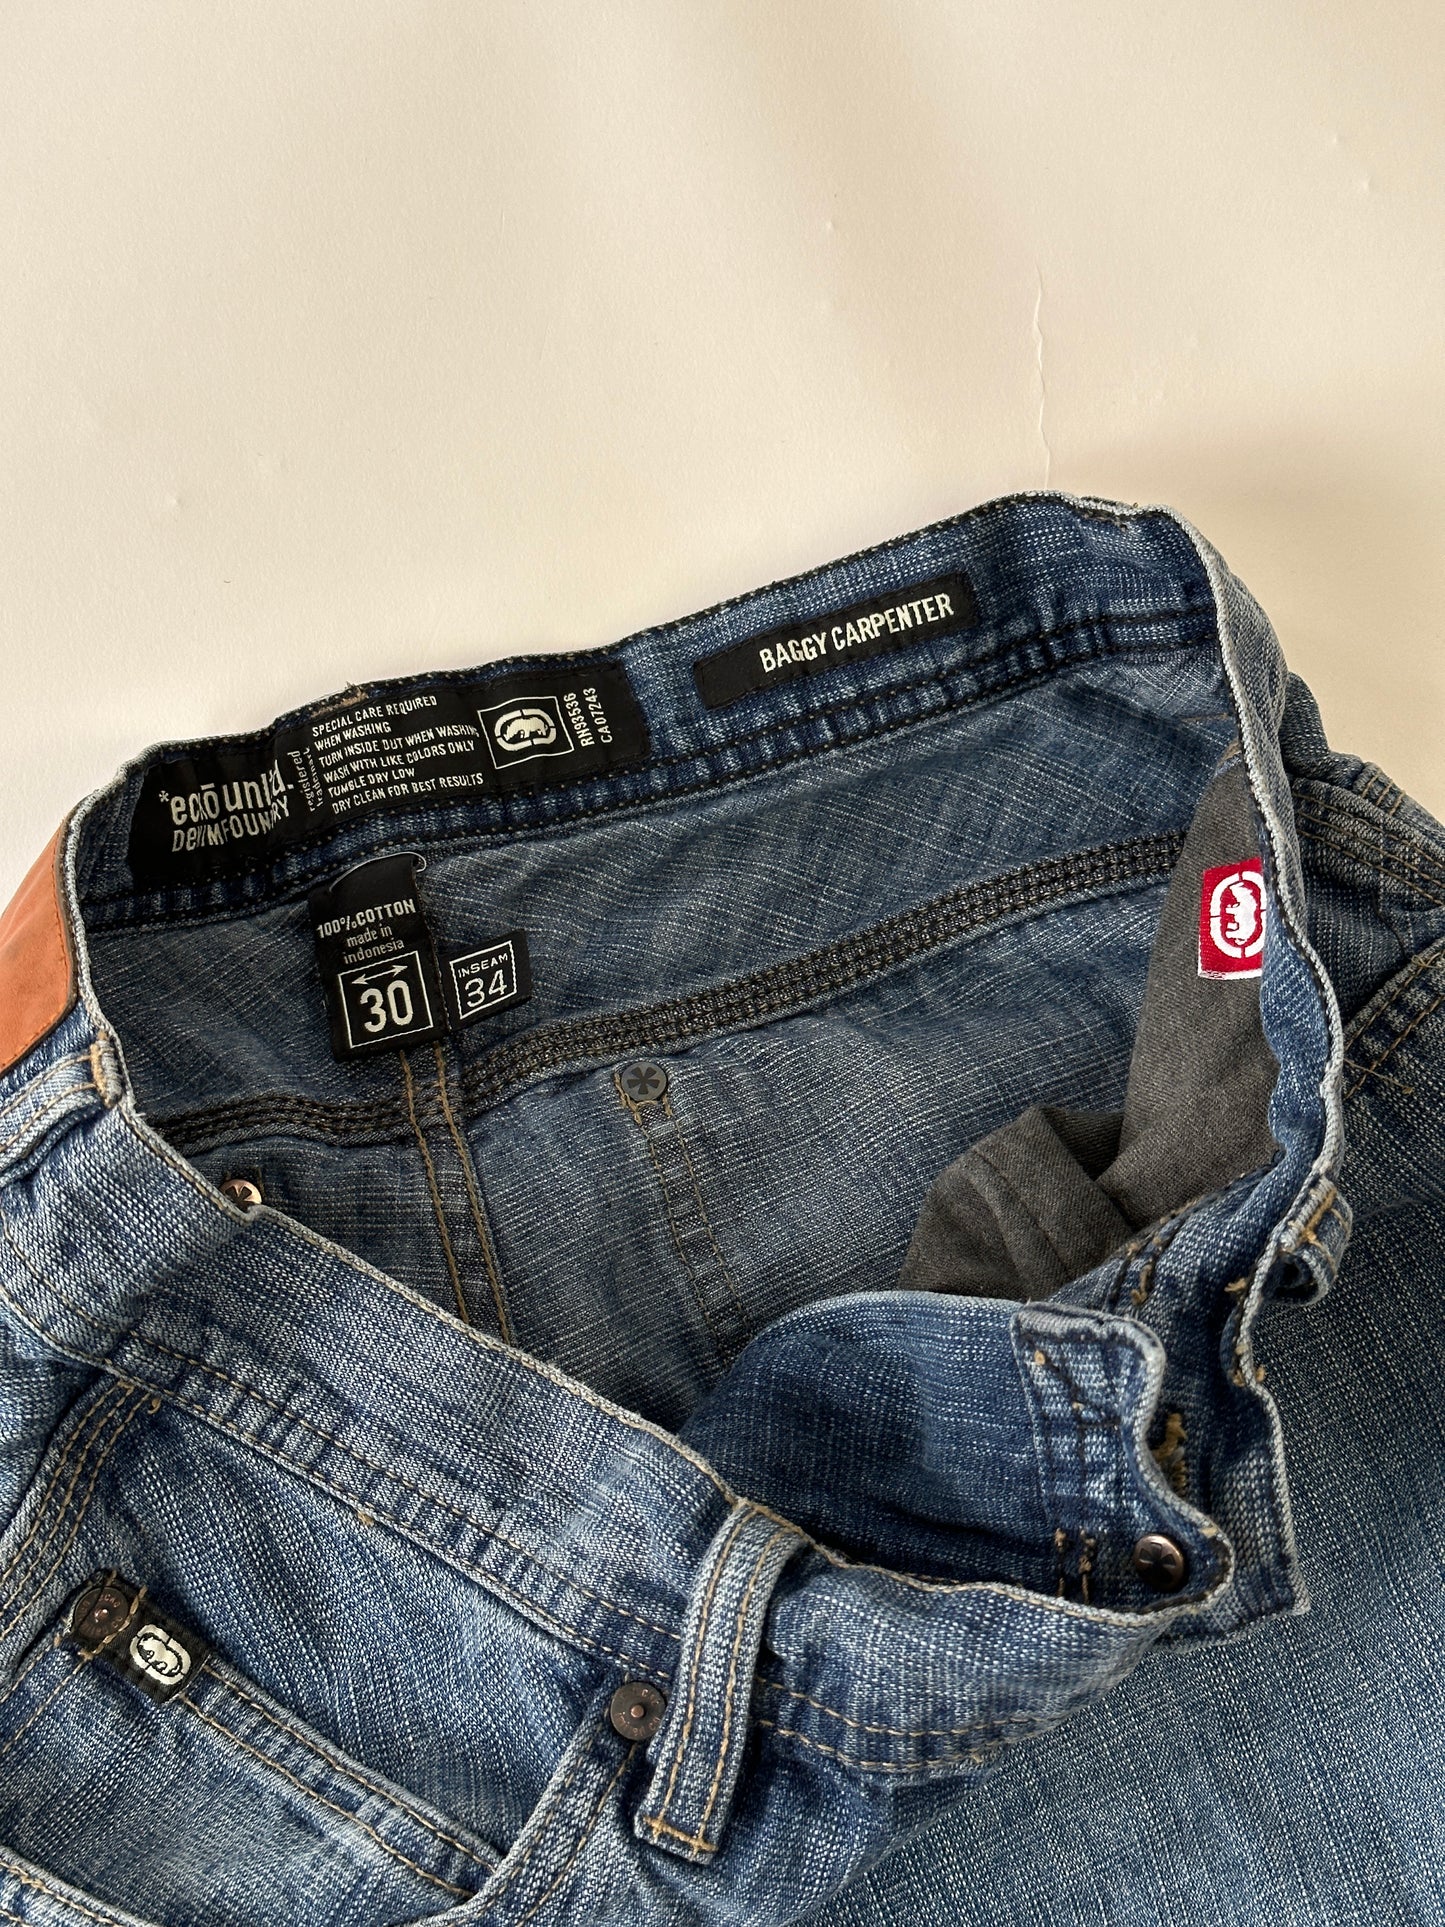 Ecko Vintage Carpenter Jeans - 30 x 34